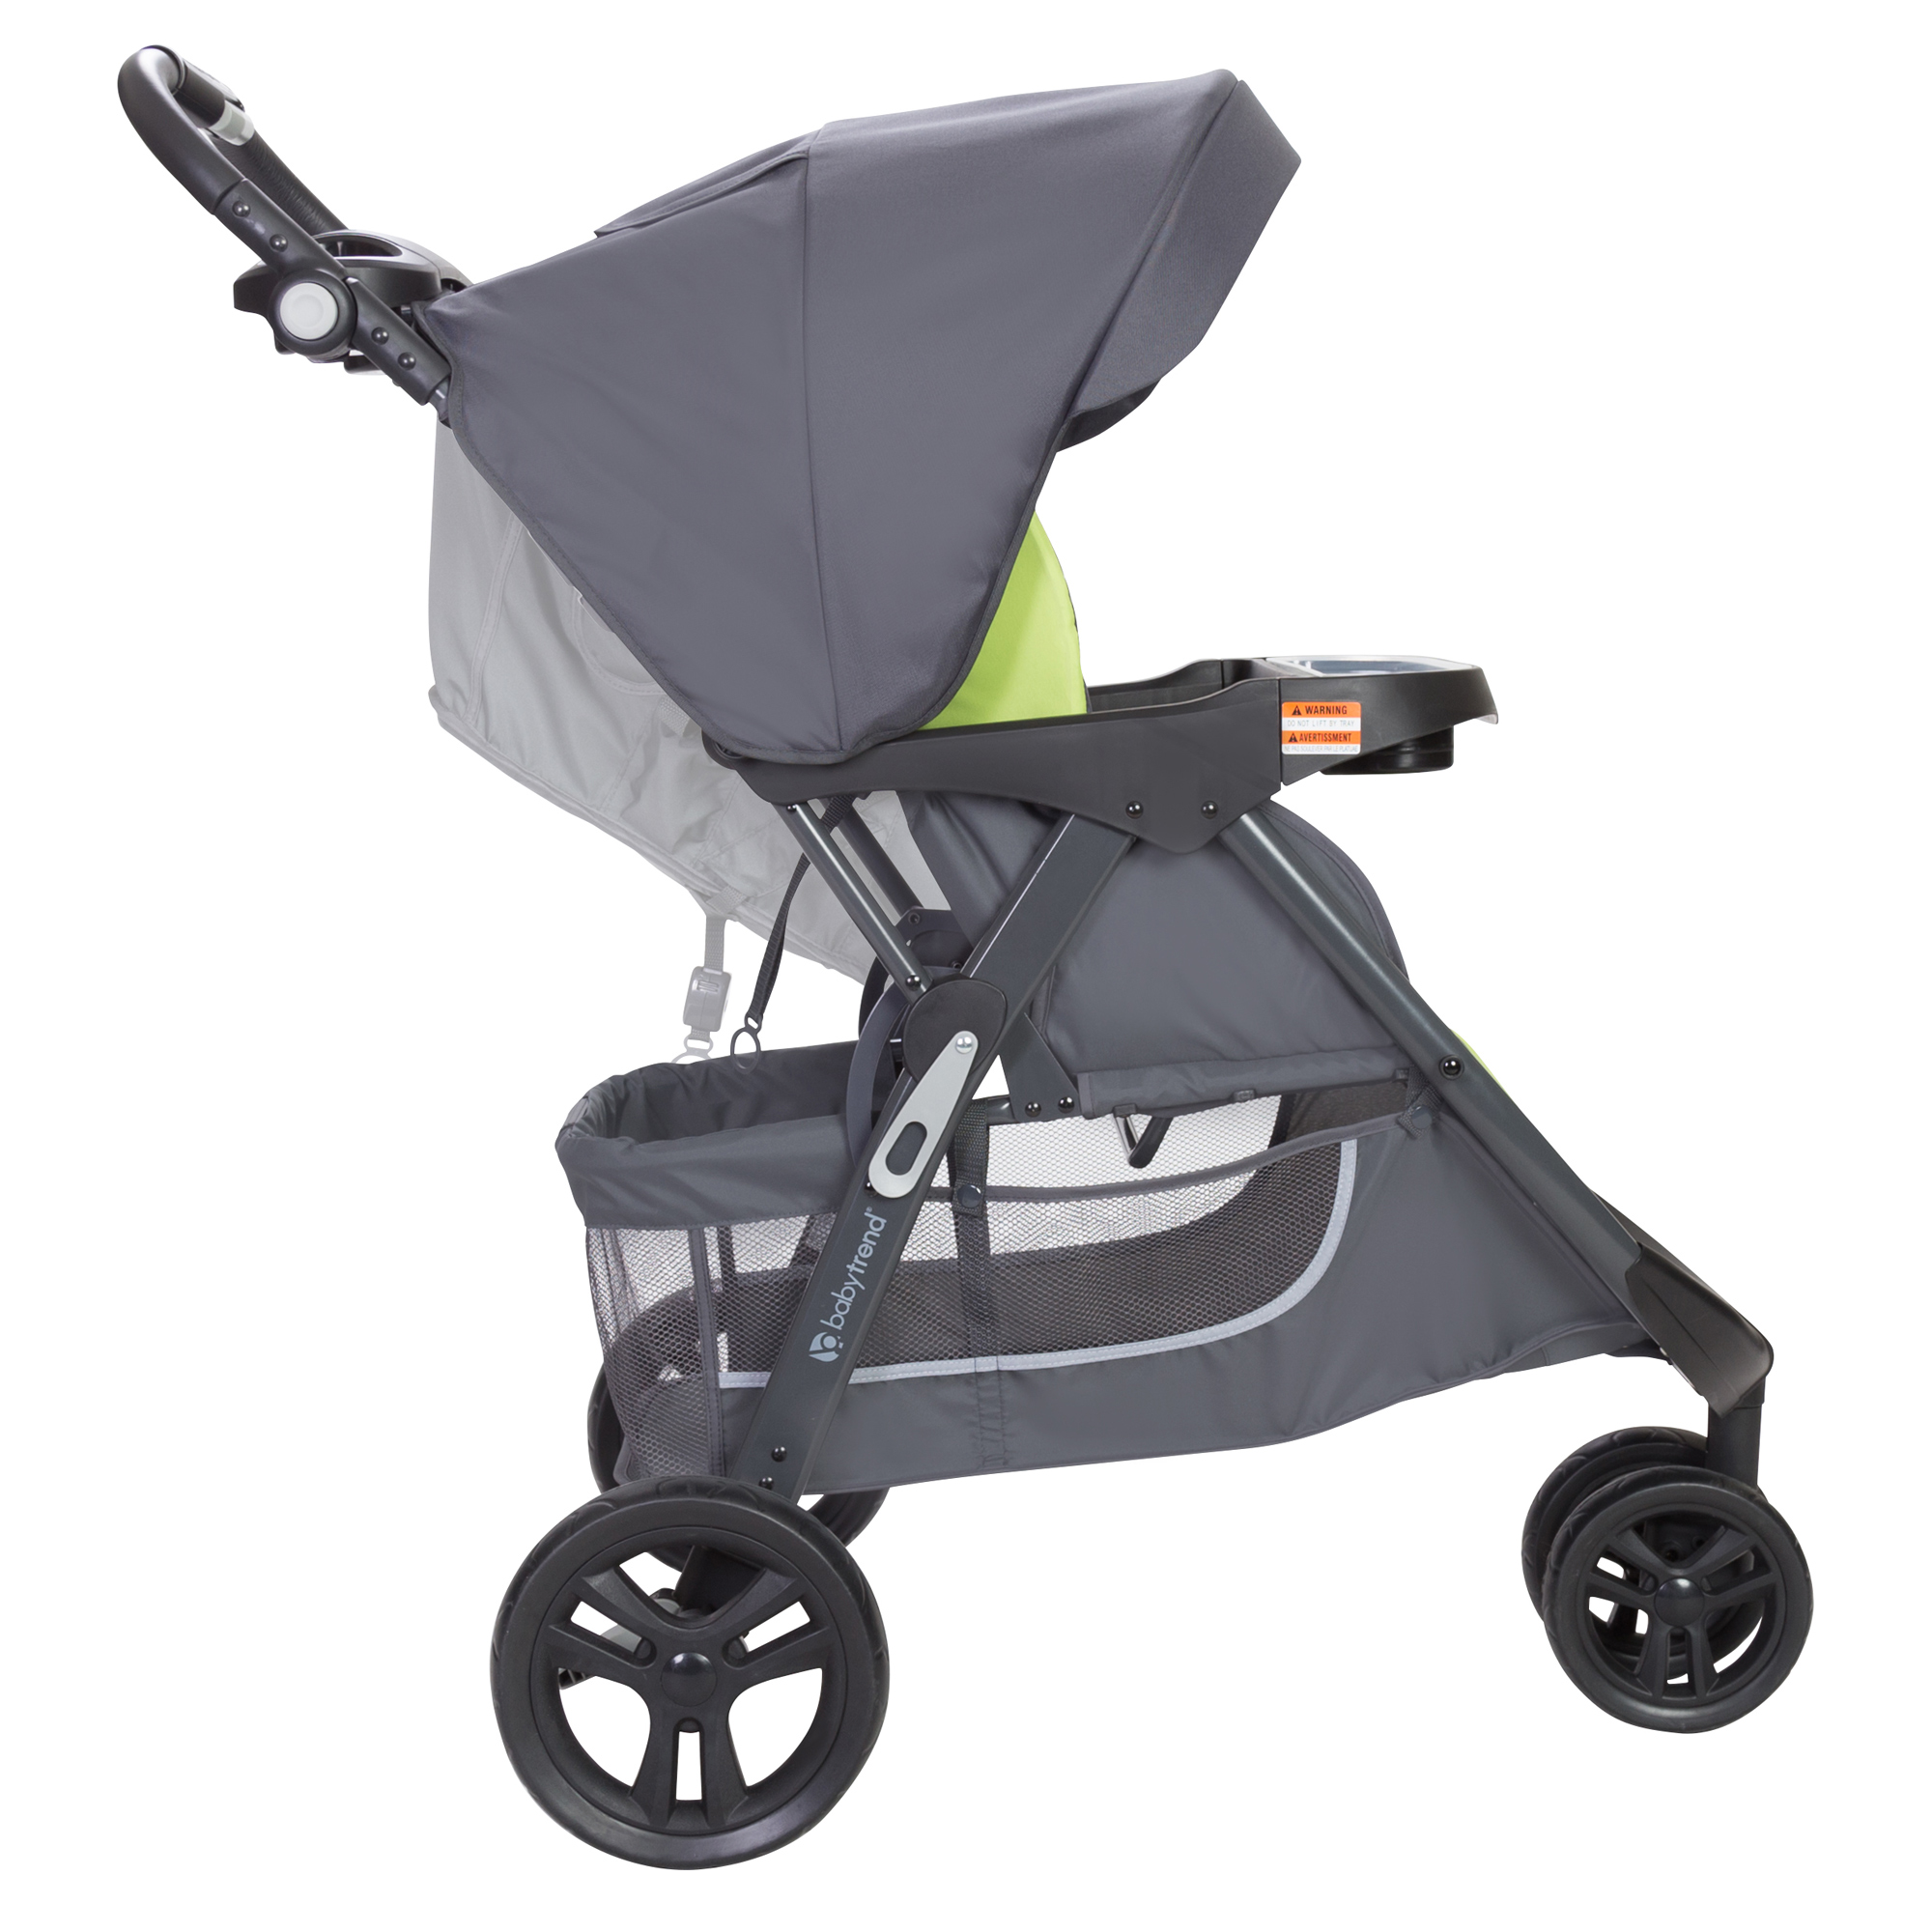 Baby Trend Skyline Travel System Stroller, Keen Green - image 4 of 6